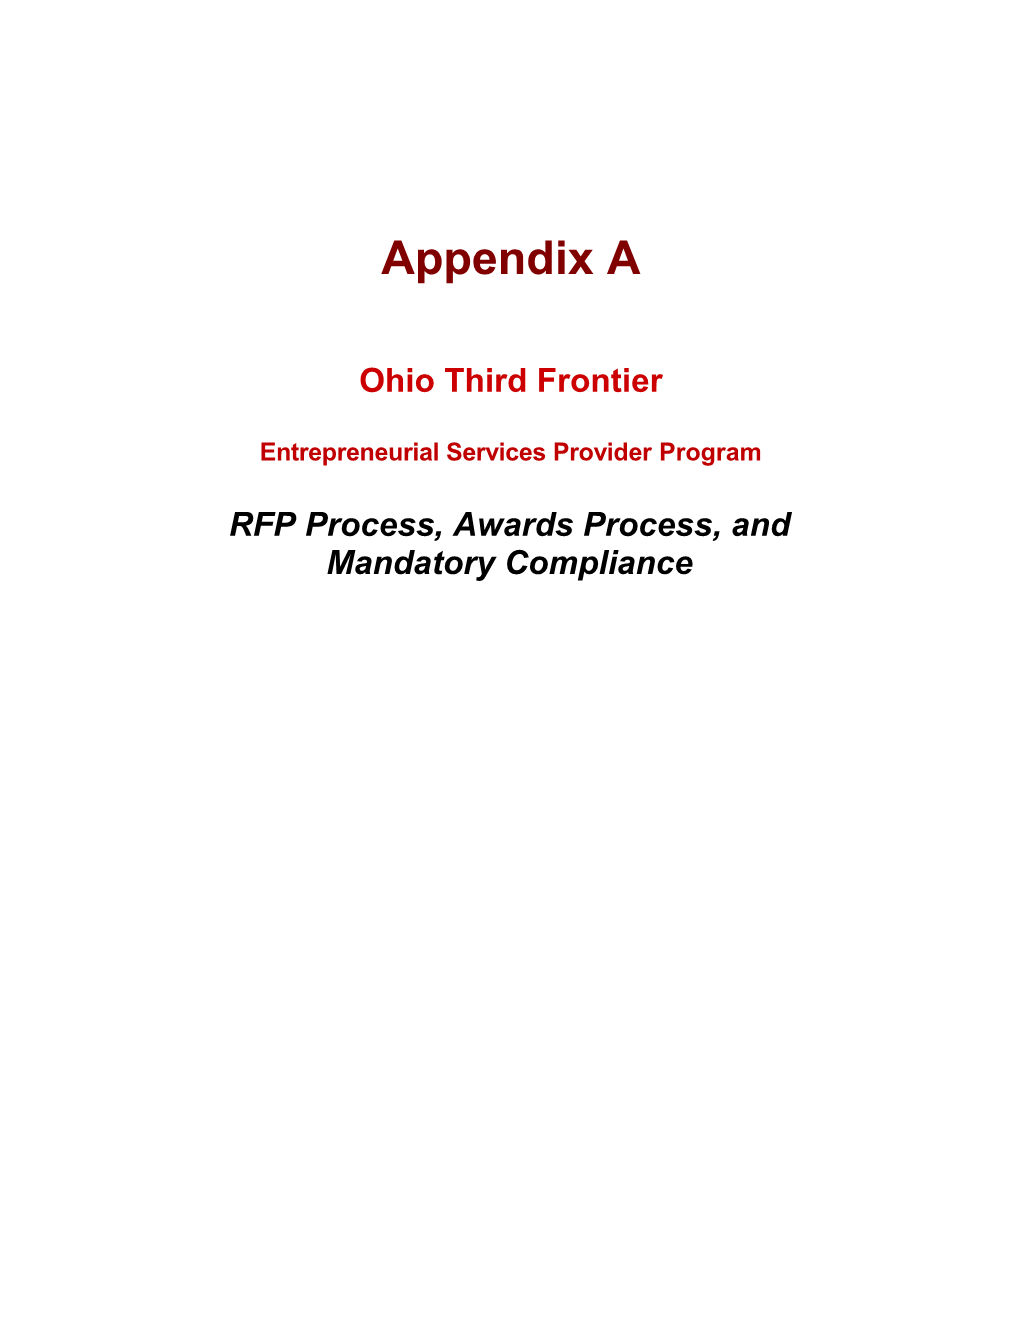 RFP Process,Awards Process,And Mandatorycompliance